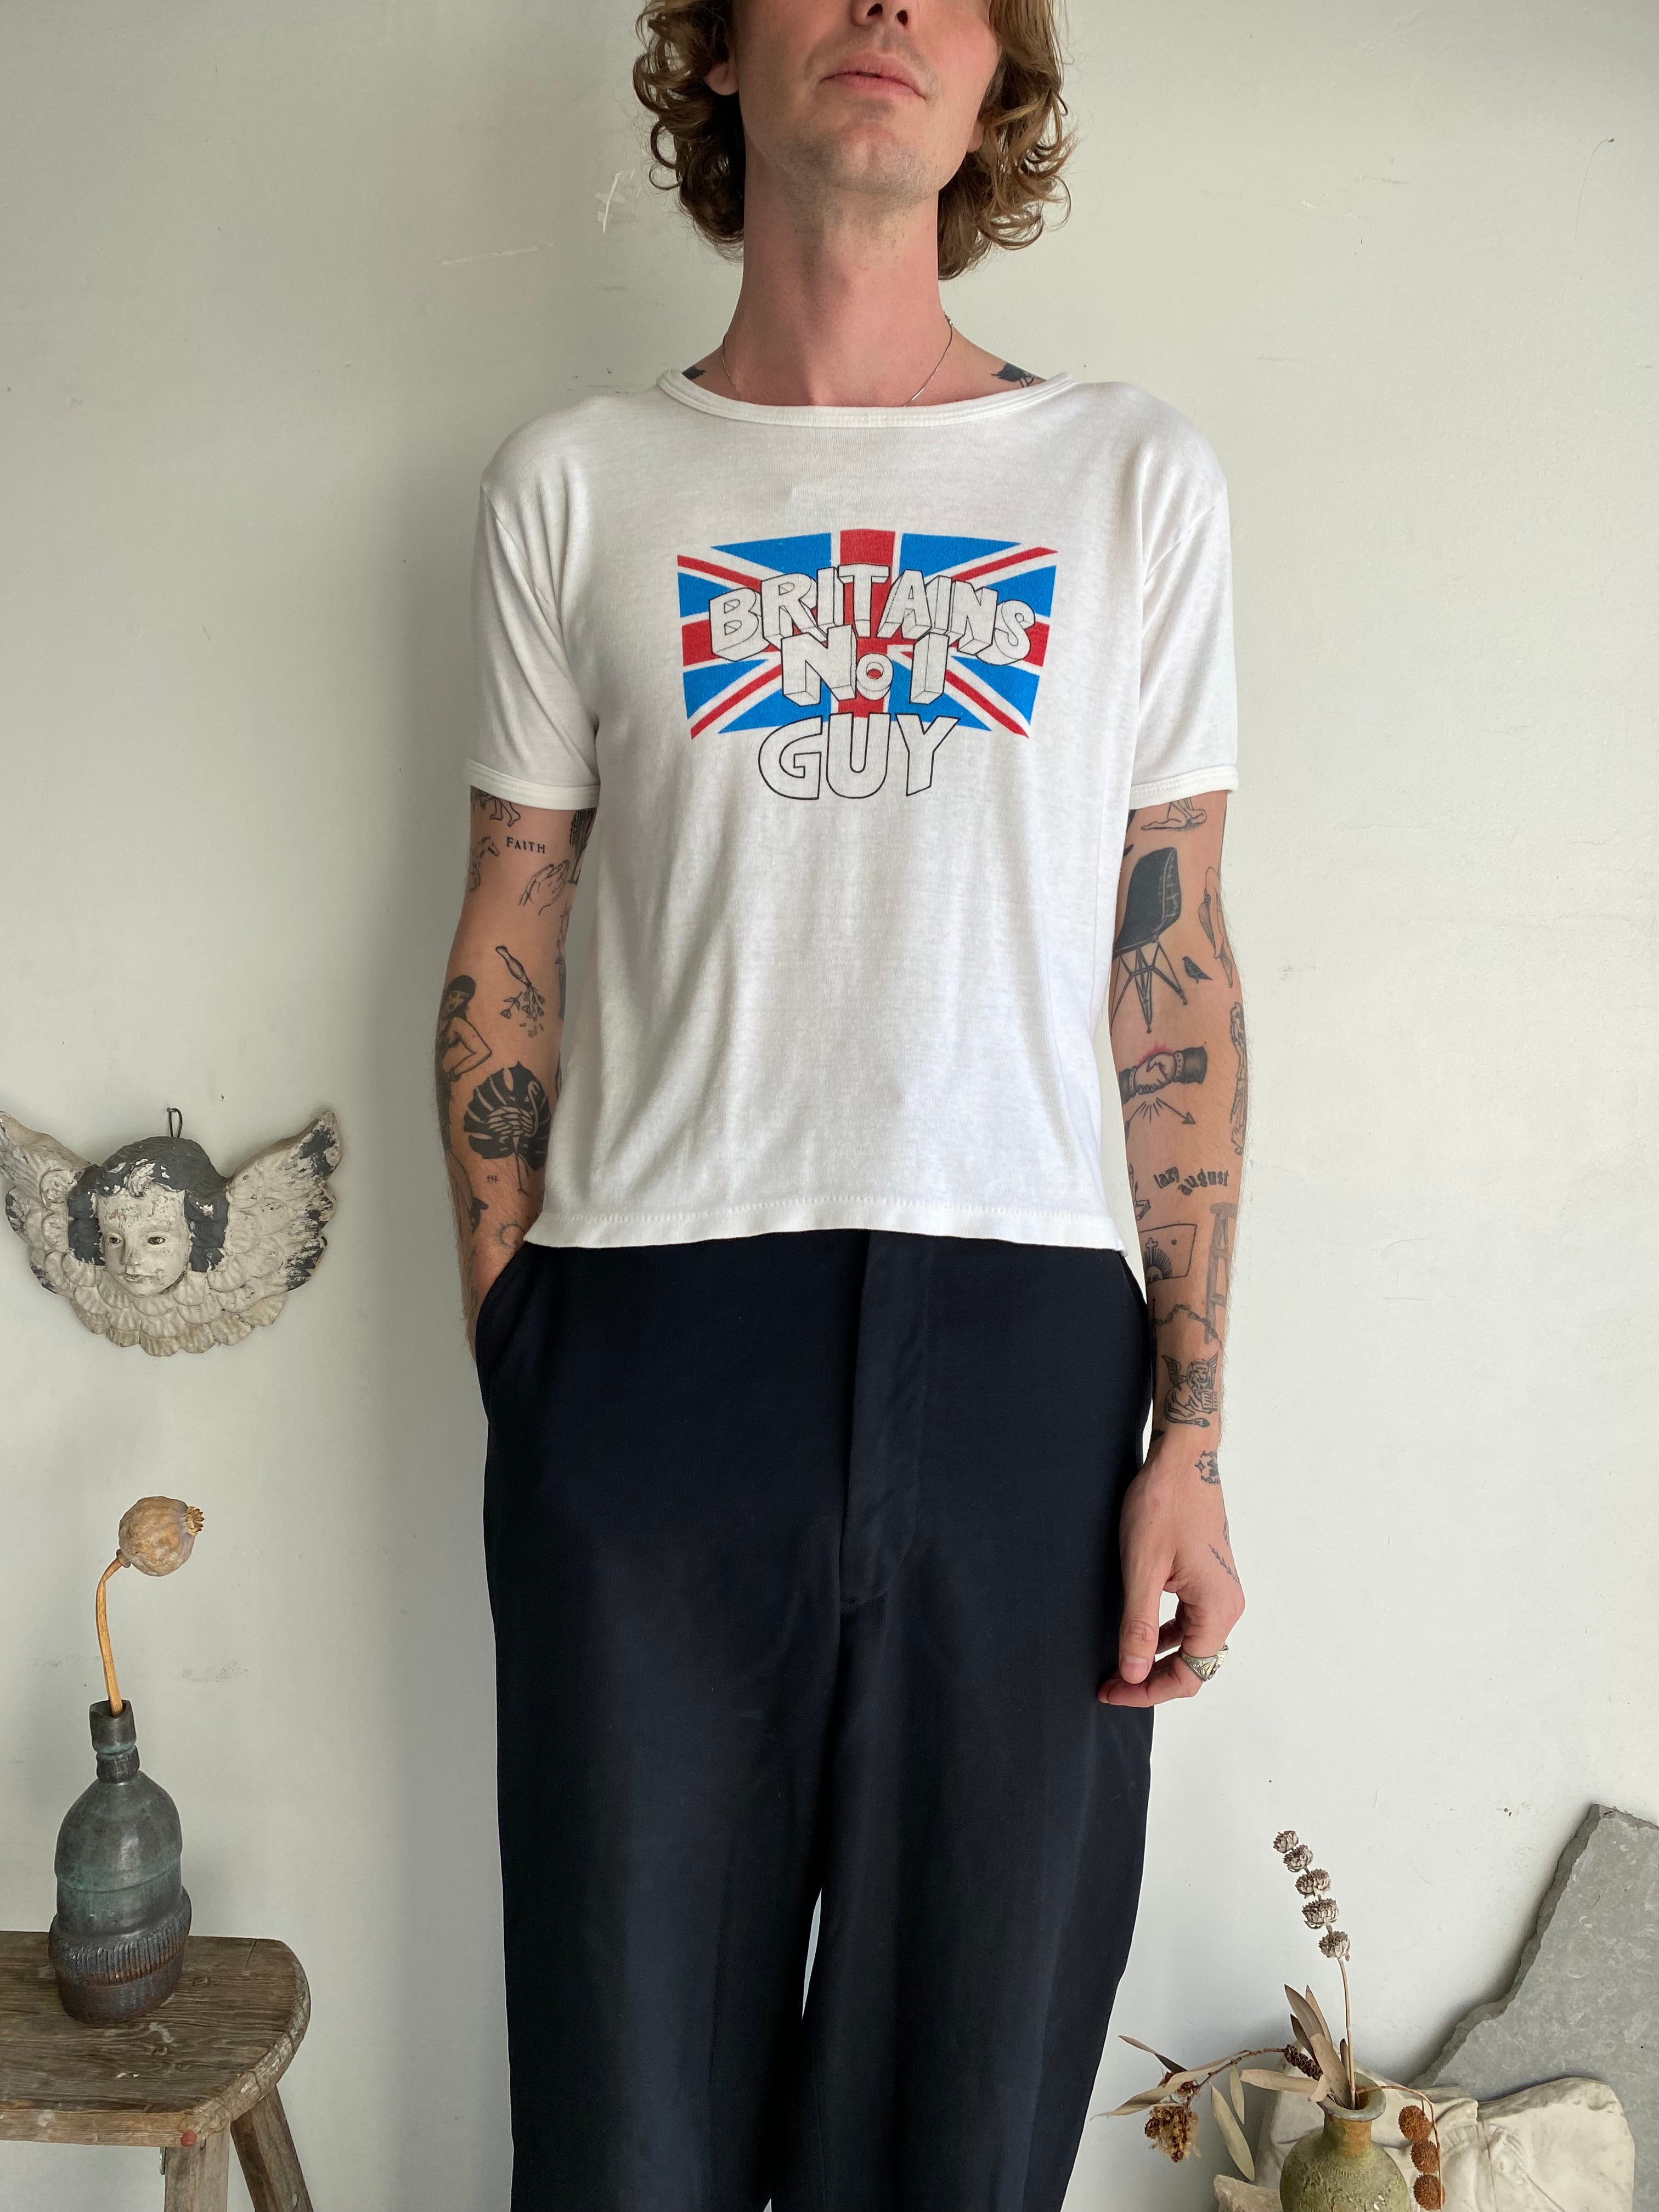 1970s Britain's No. 1 Guy T-Shirt (S/M)